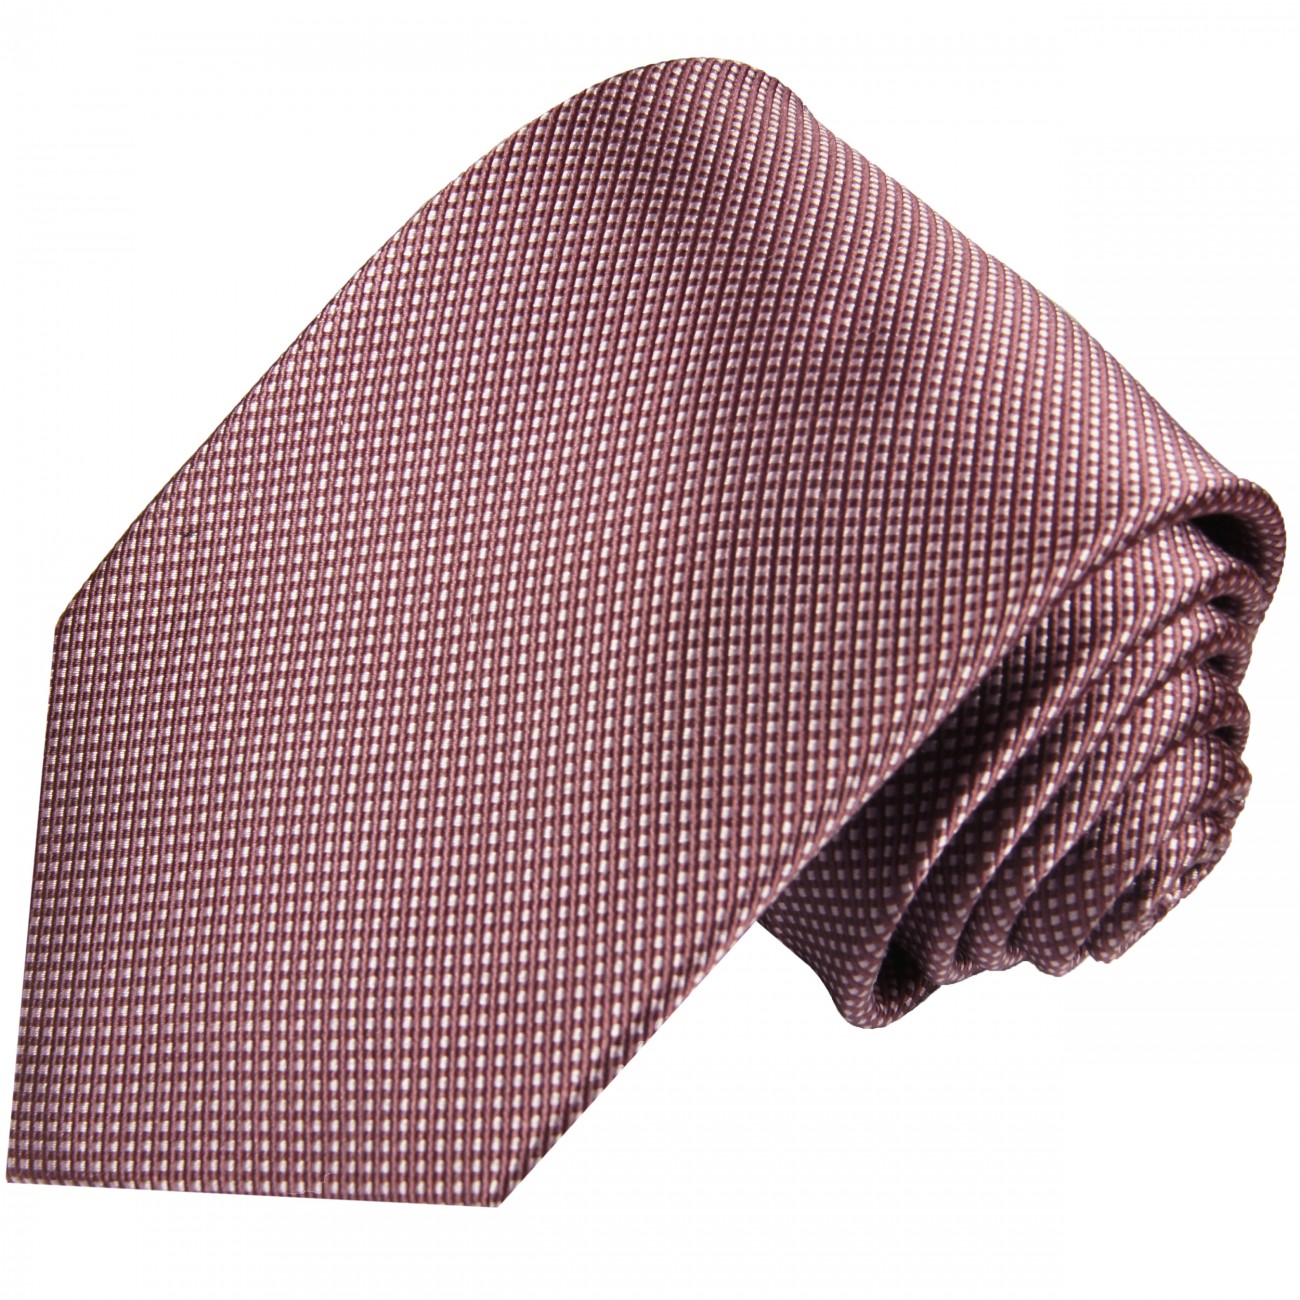 Krawatte Malve mauve pink gepunktet Seide